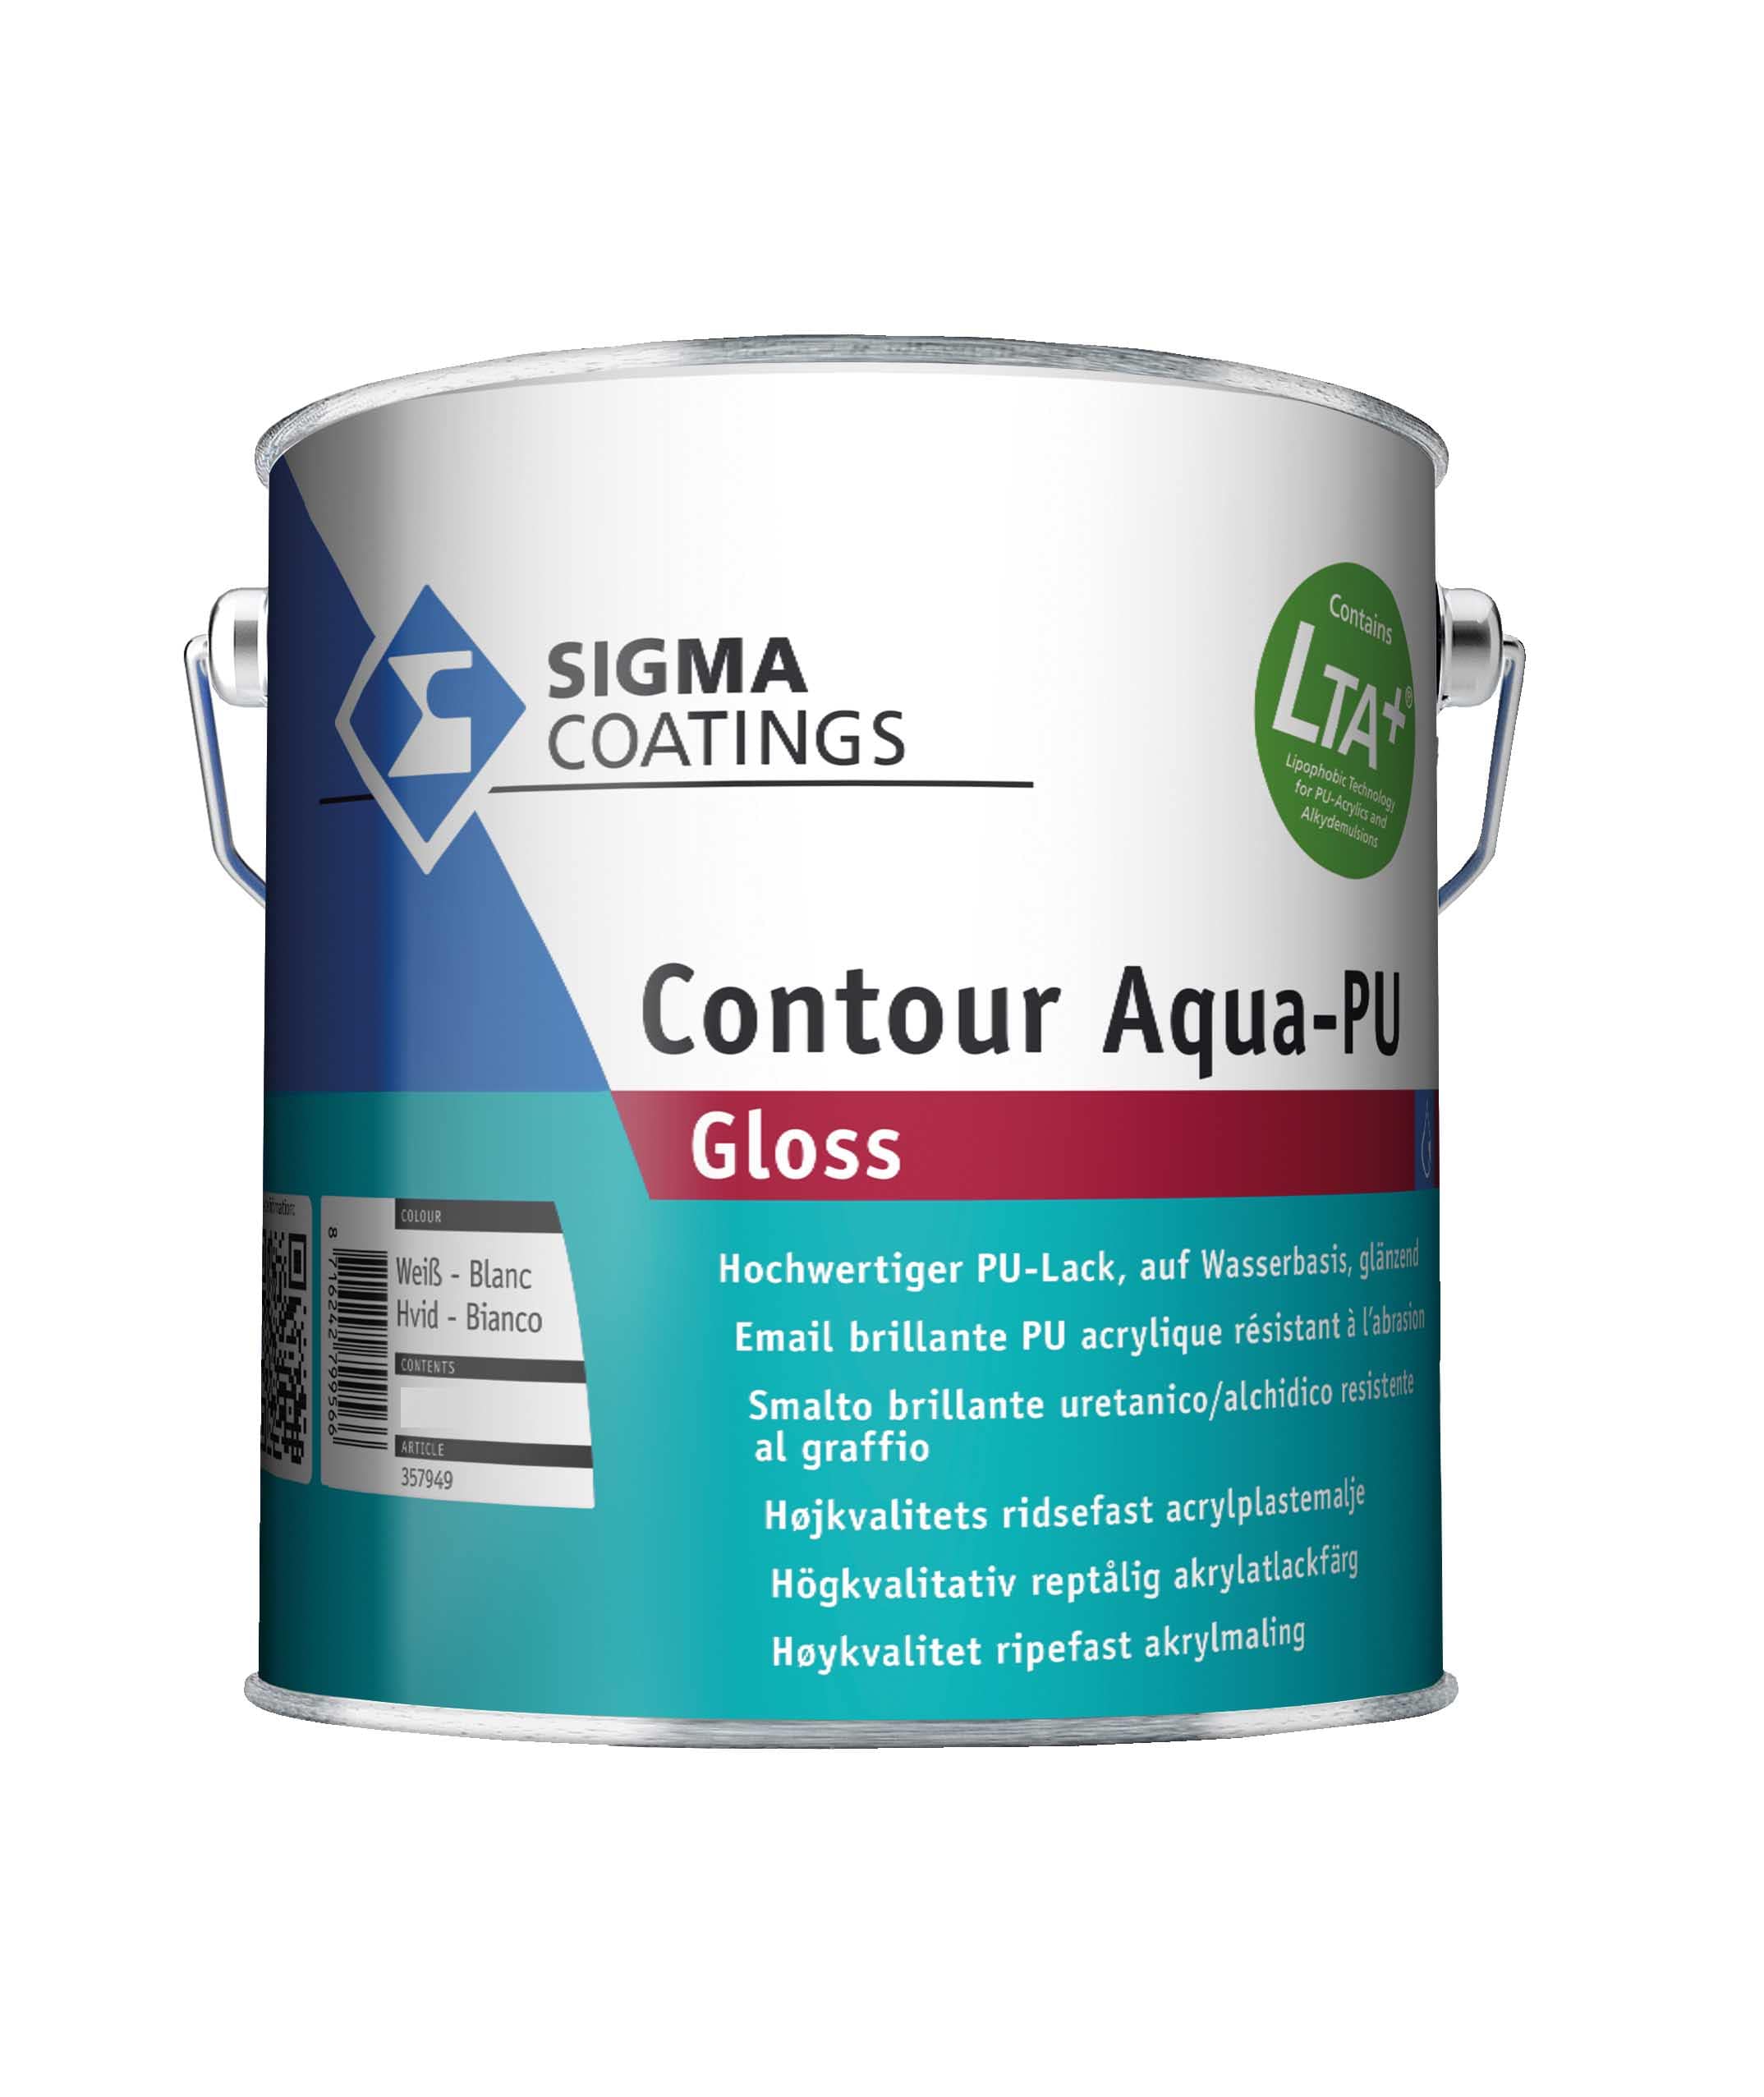 SIGMA Contour Aqua-PU Gloss